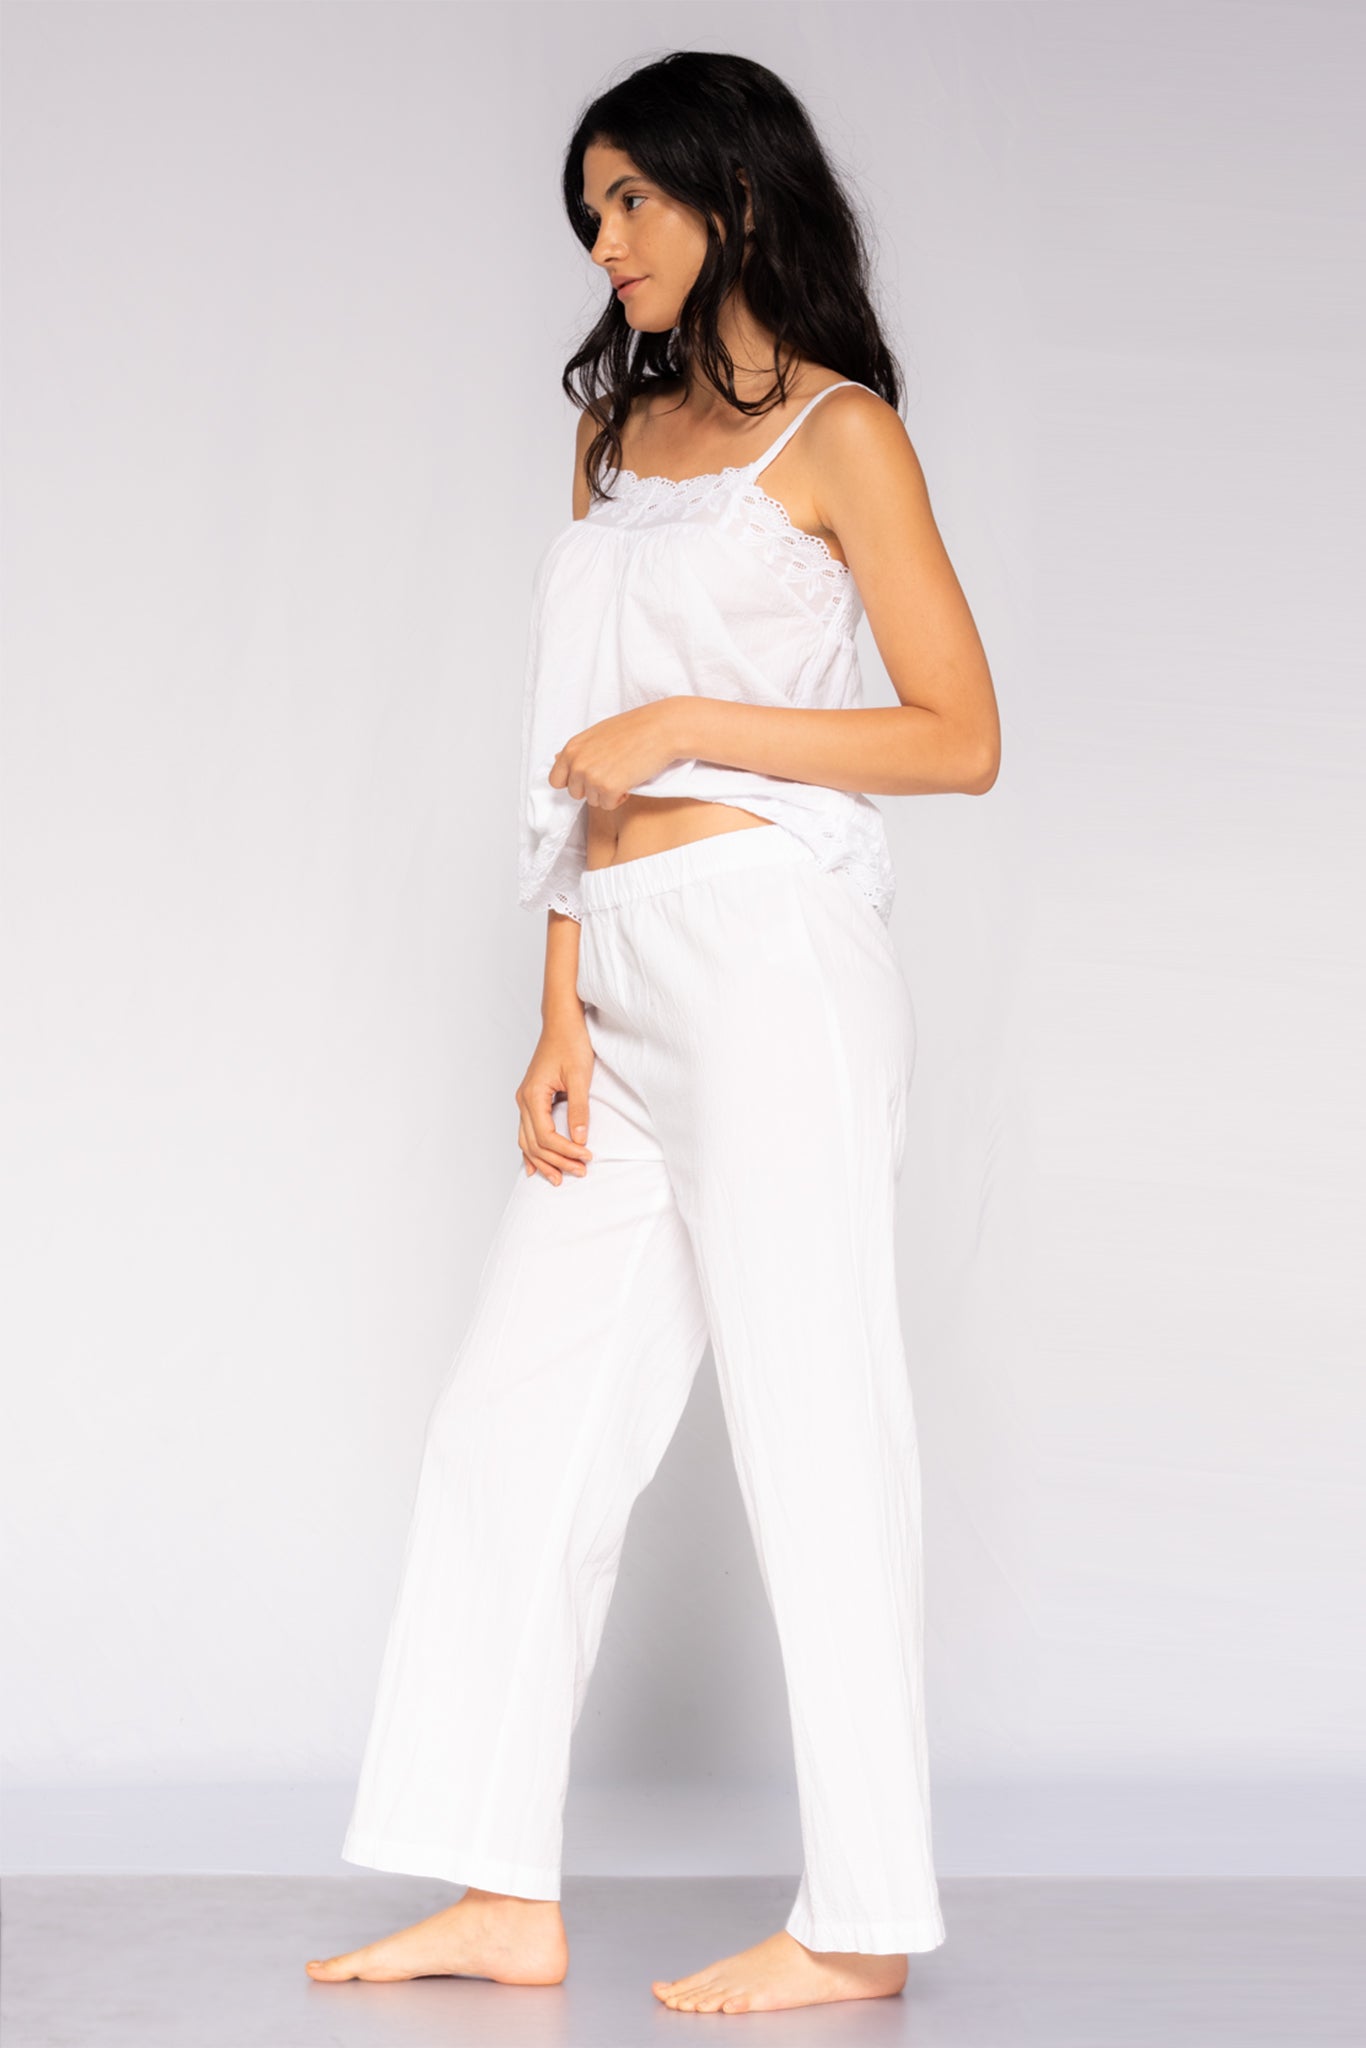 Women's Printed Lounge Pants Comfortable Long Pajama Pants For Women[Pack  of 3] | eBay